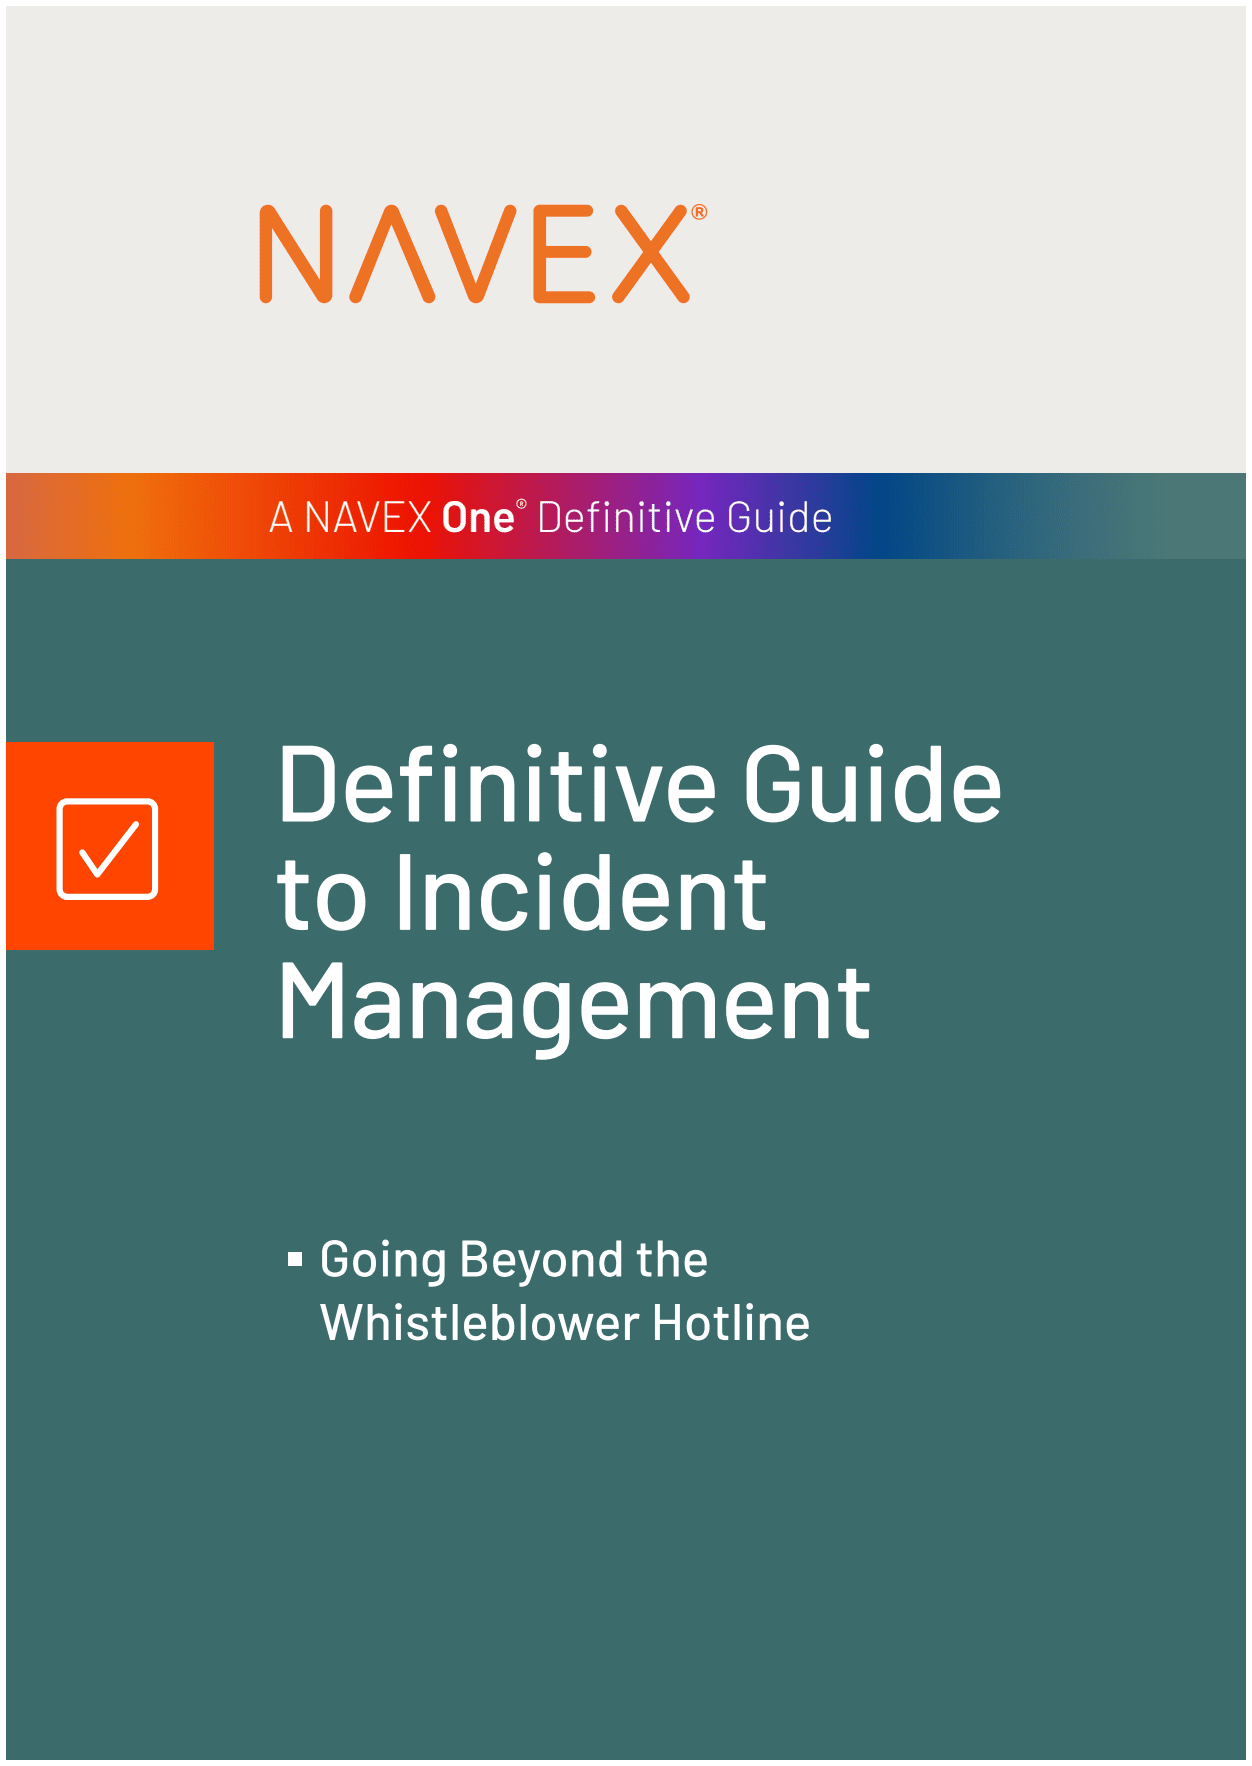 teaser image for definitive guide to incident management 